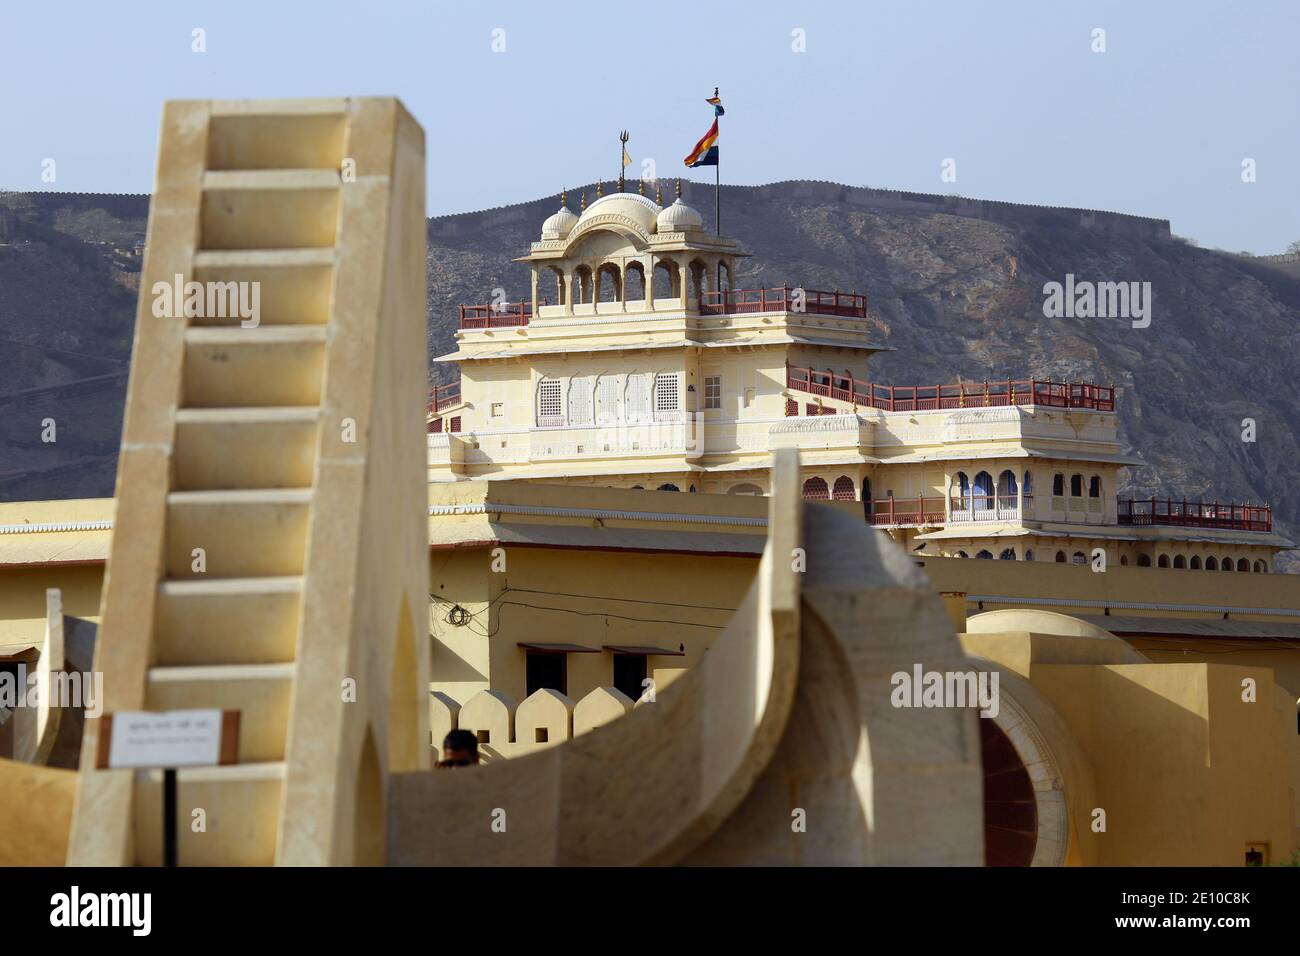 Strumenti astronomici a Jantar Mantar, Jaipur, India, costruito da Sawai Jai Singh II, il fondatore di Jaipur, Rajasthan, completato nel 1734 Foto Stock